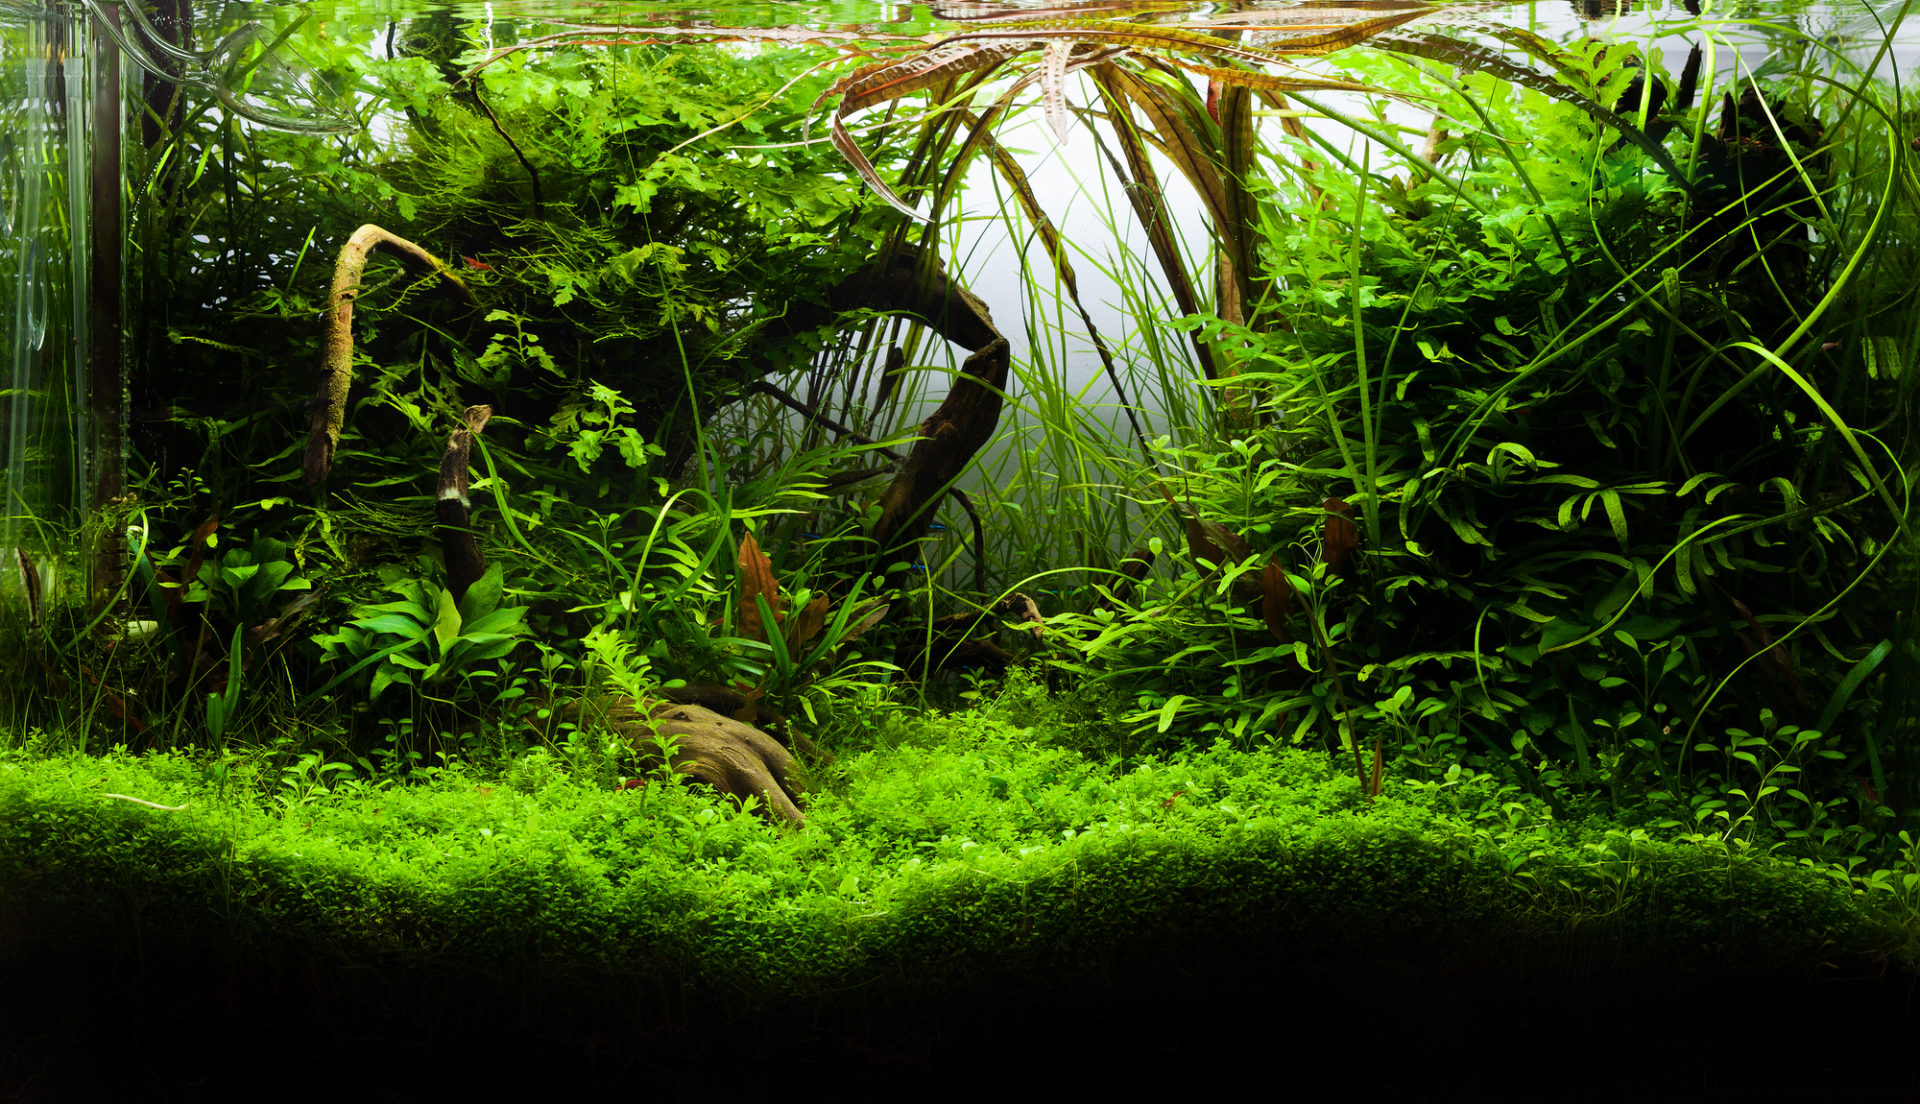 akwarium roślinne